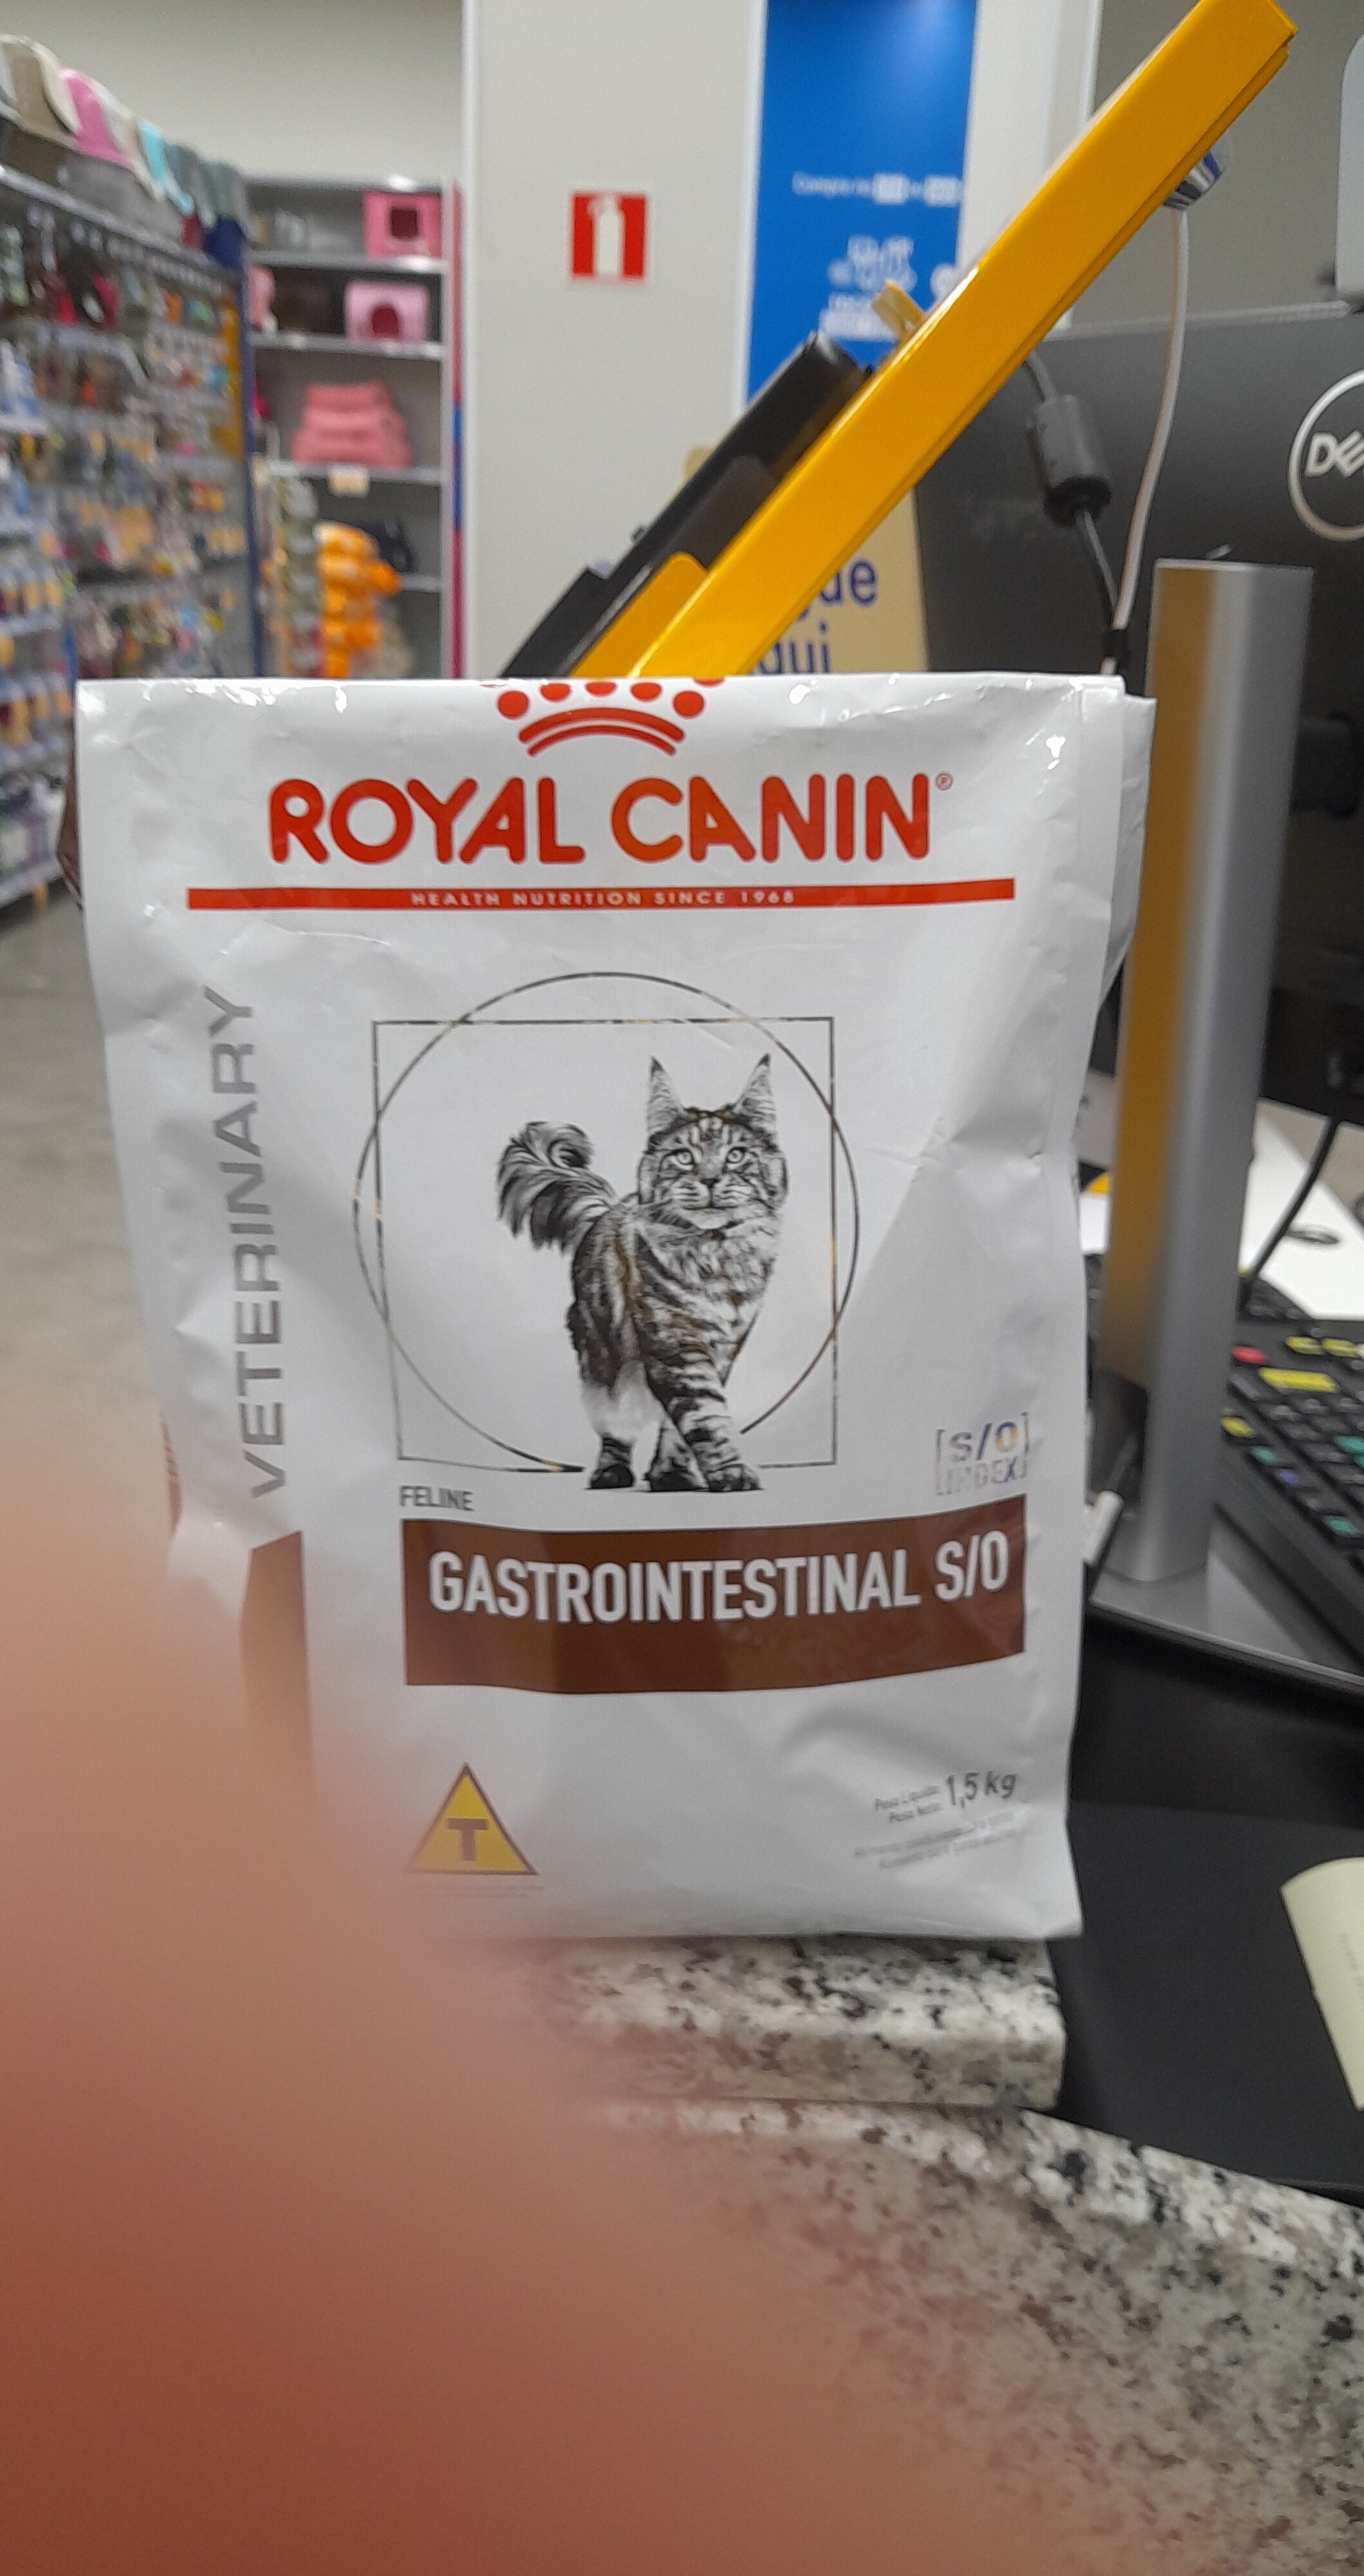 Royal canin gastrointestinal S/O - Product - pt